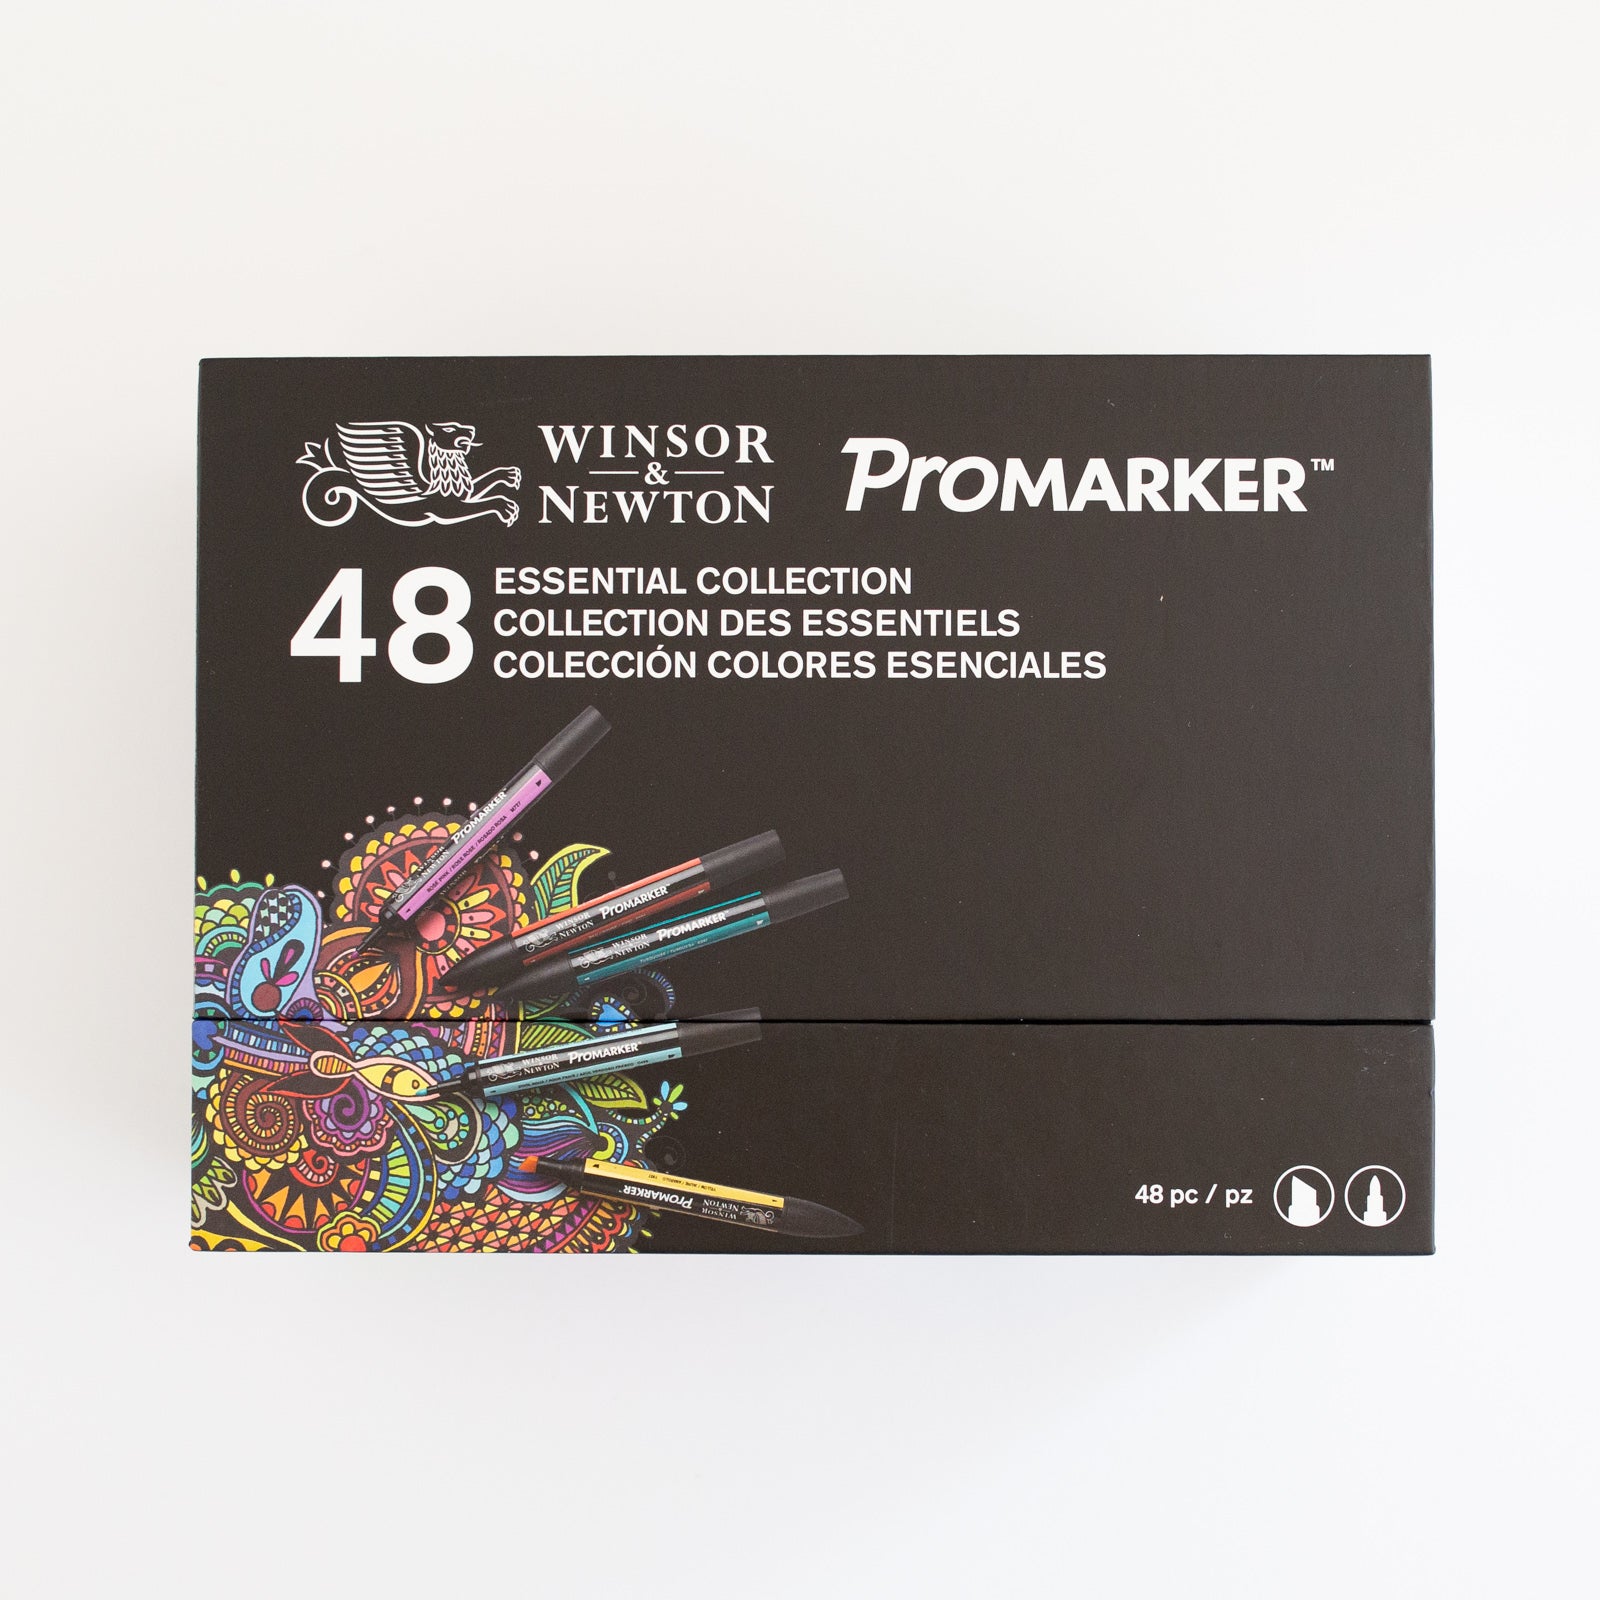  Winsor & Newton ProMarker Watercolor Marker Set, 6 Count, Basic  Tones